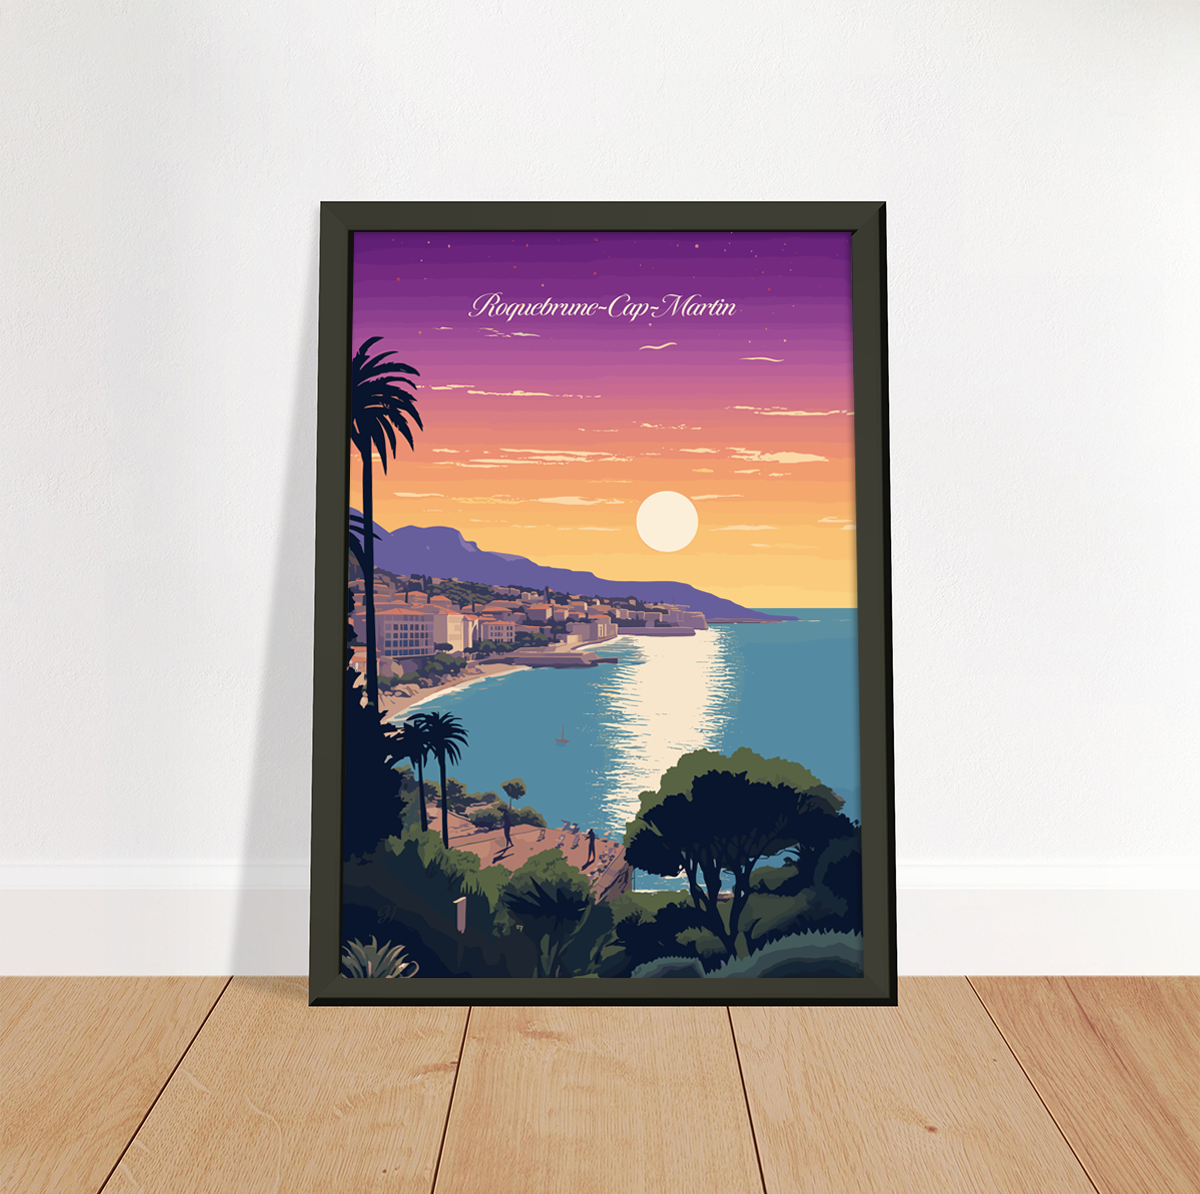 Roquebrune-Cap-Martin poster by bon voyage design